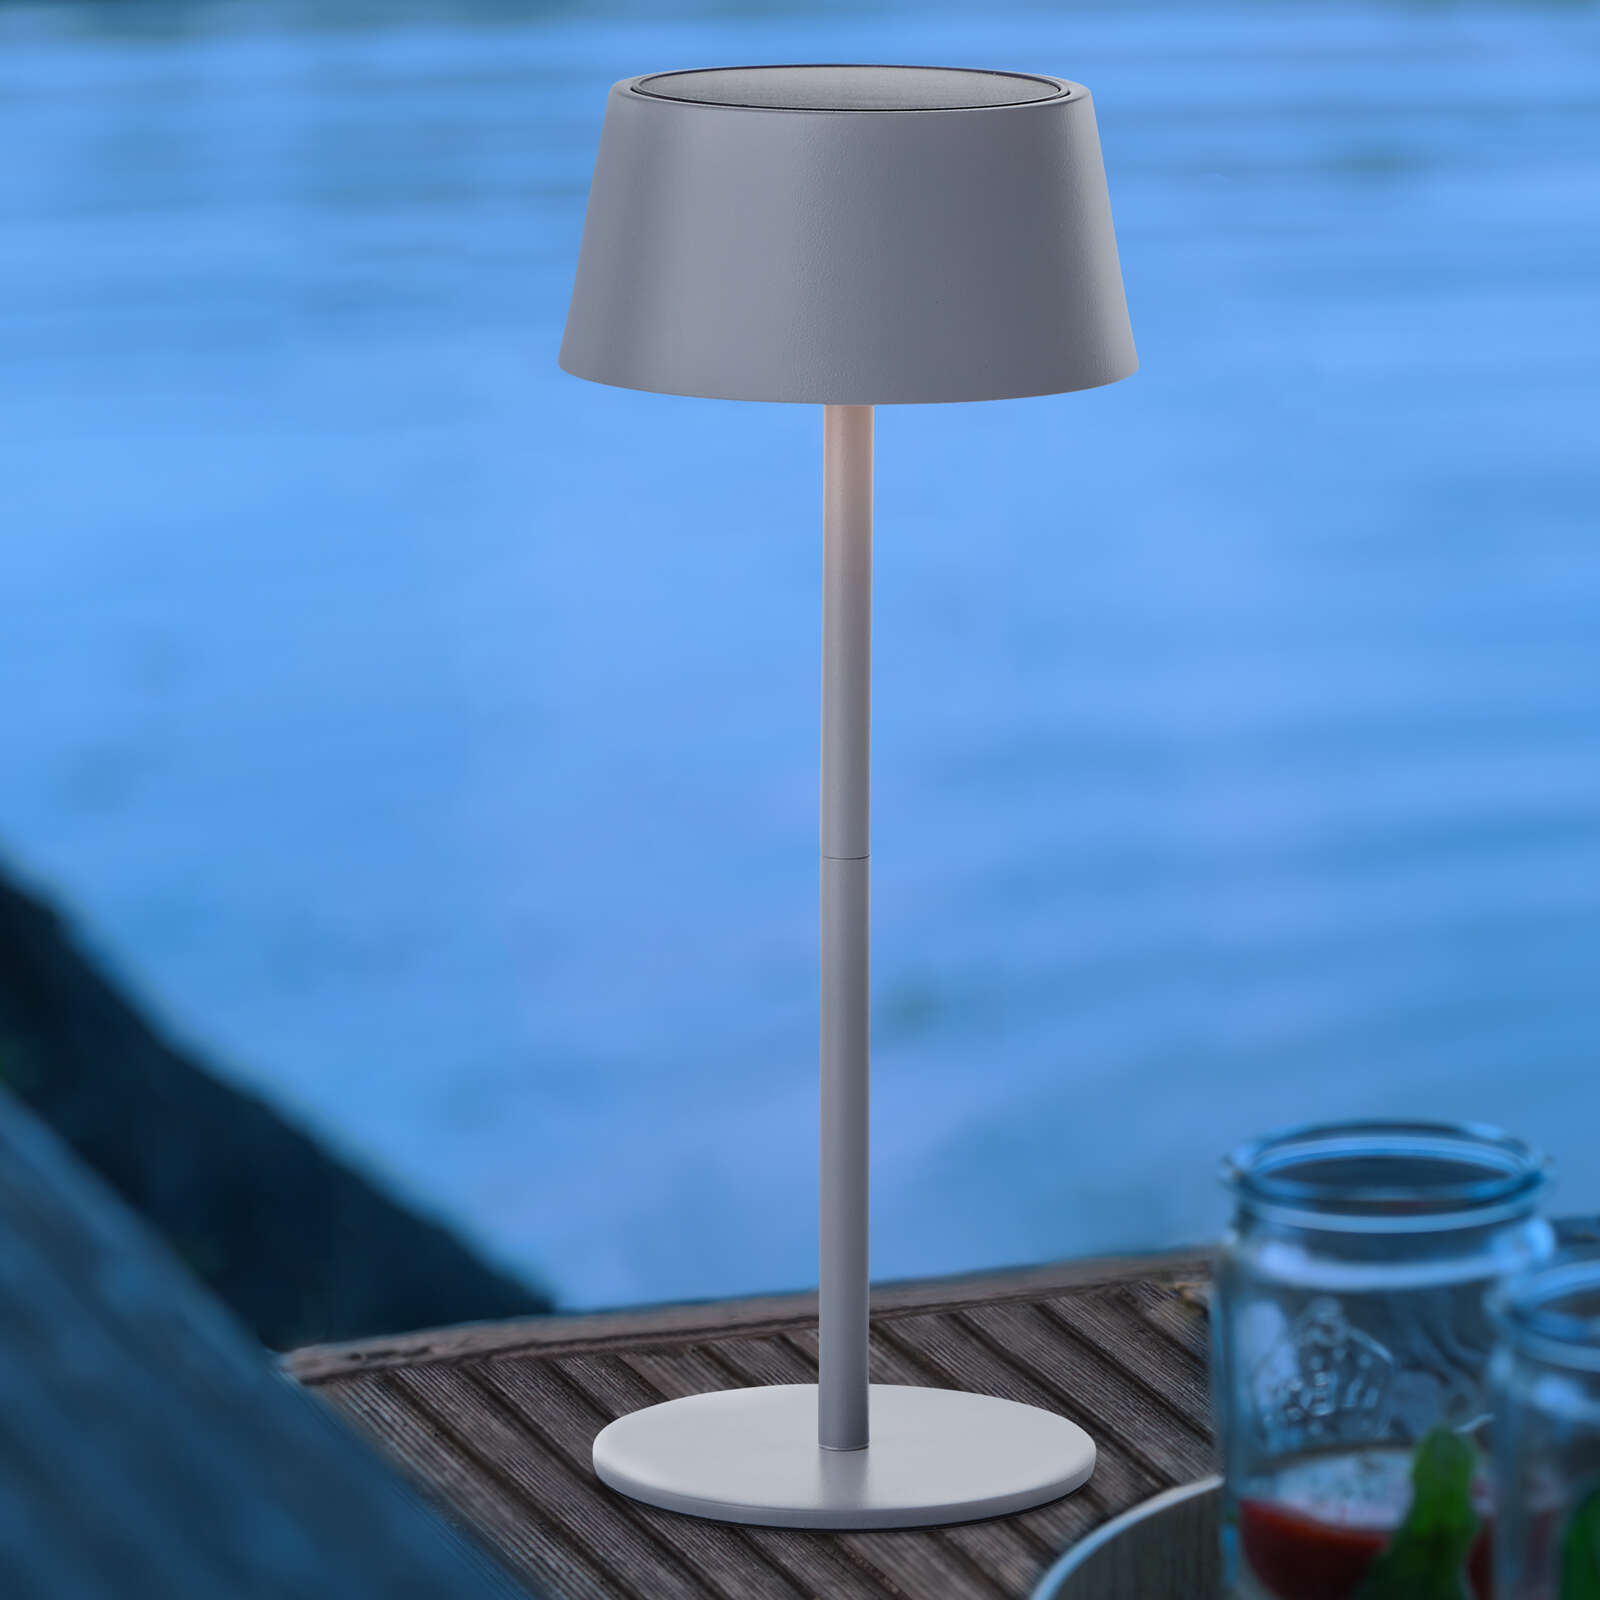             Lámpara de mesa de metal - Outy 2 - Gris
        